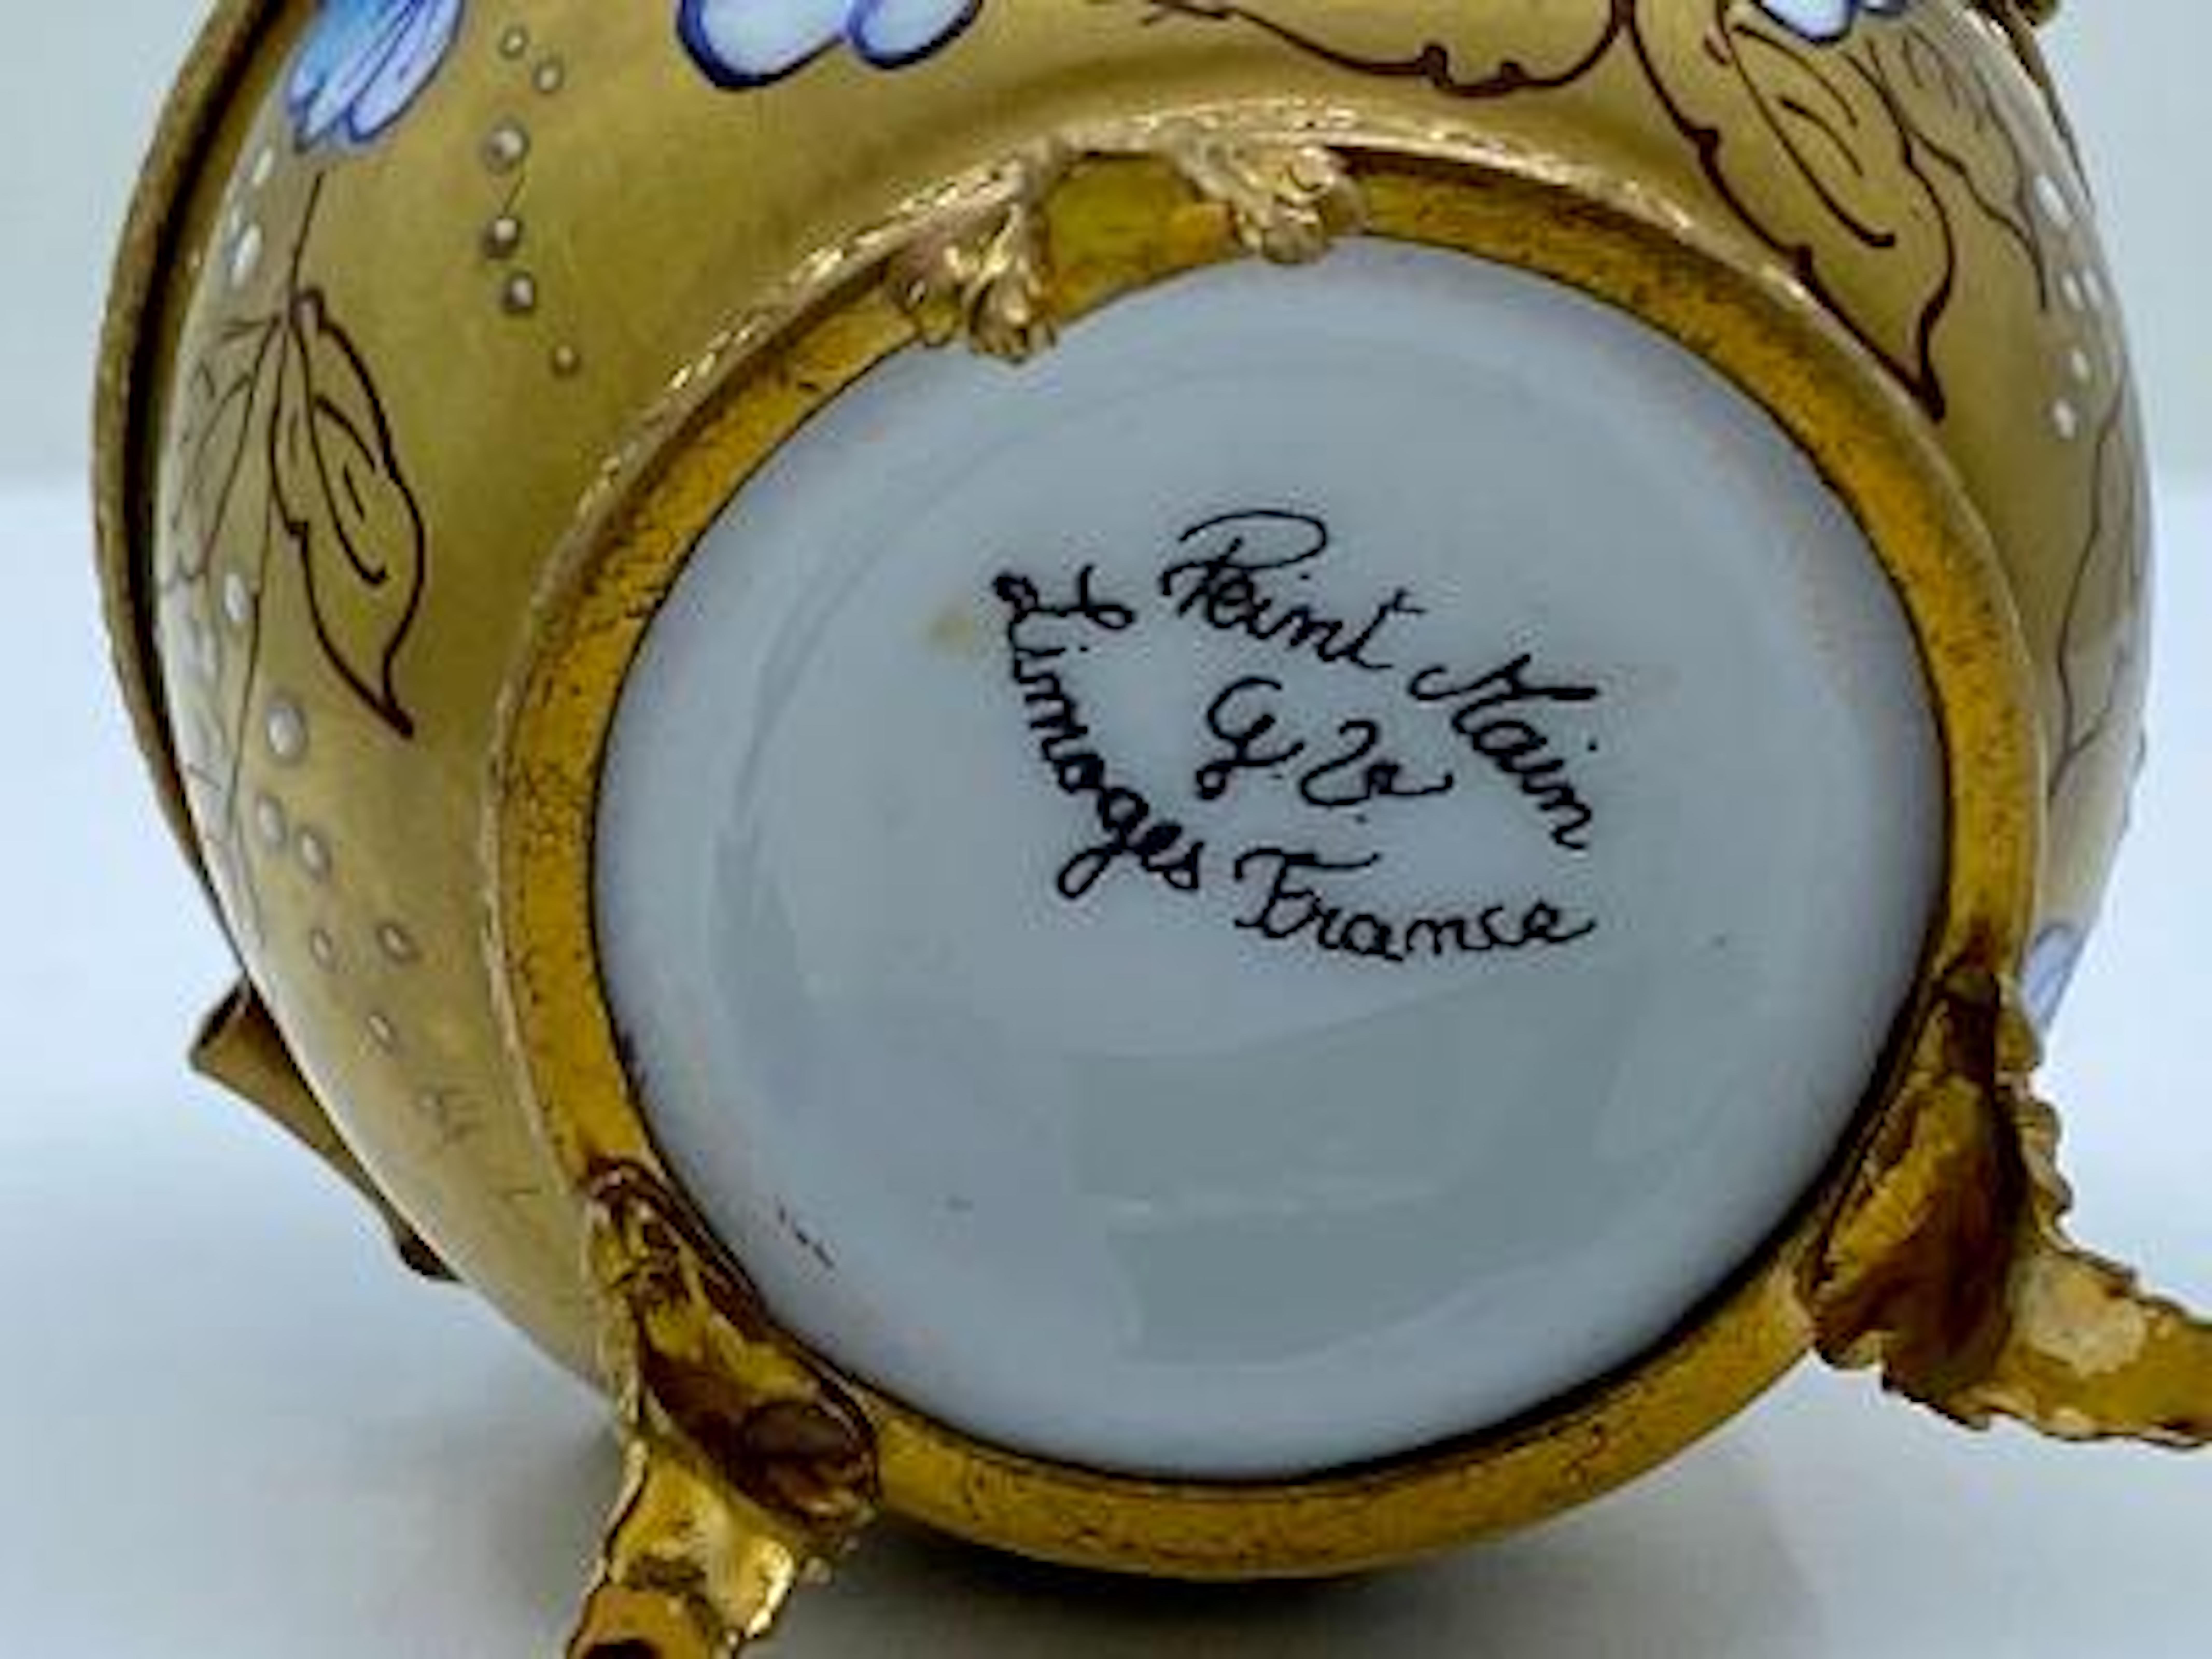 20th Century Exquisite Limoges France 24-Karat Gold Porcelain Egg with Perfume Bottle Inside